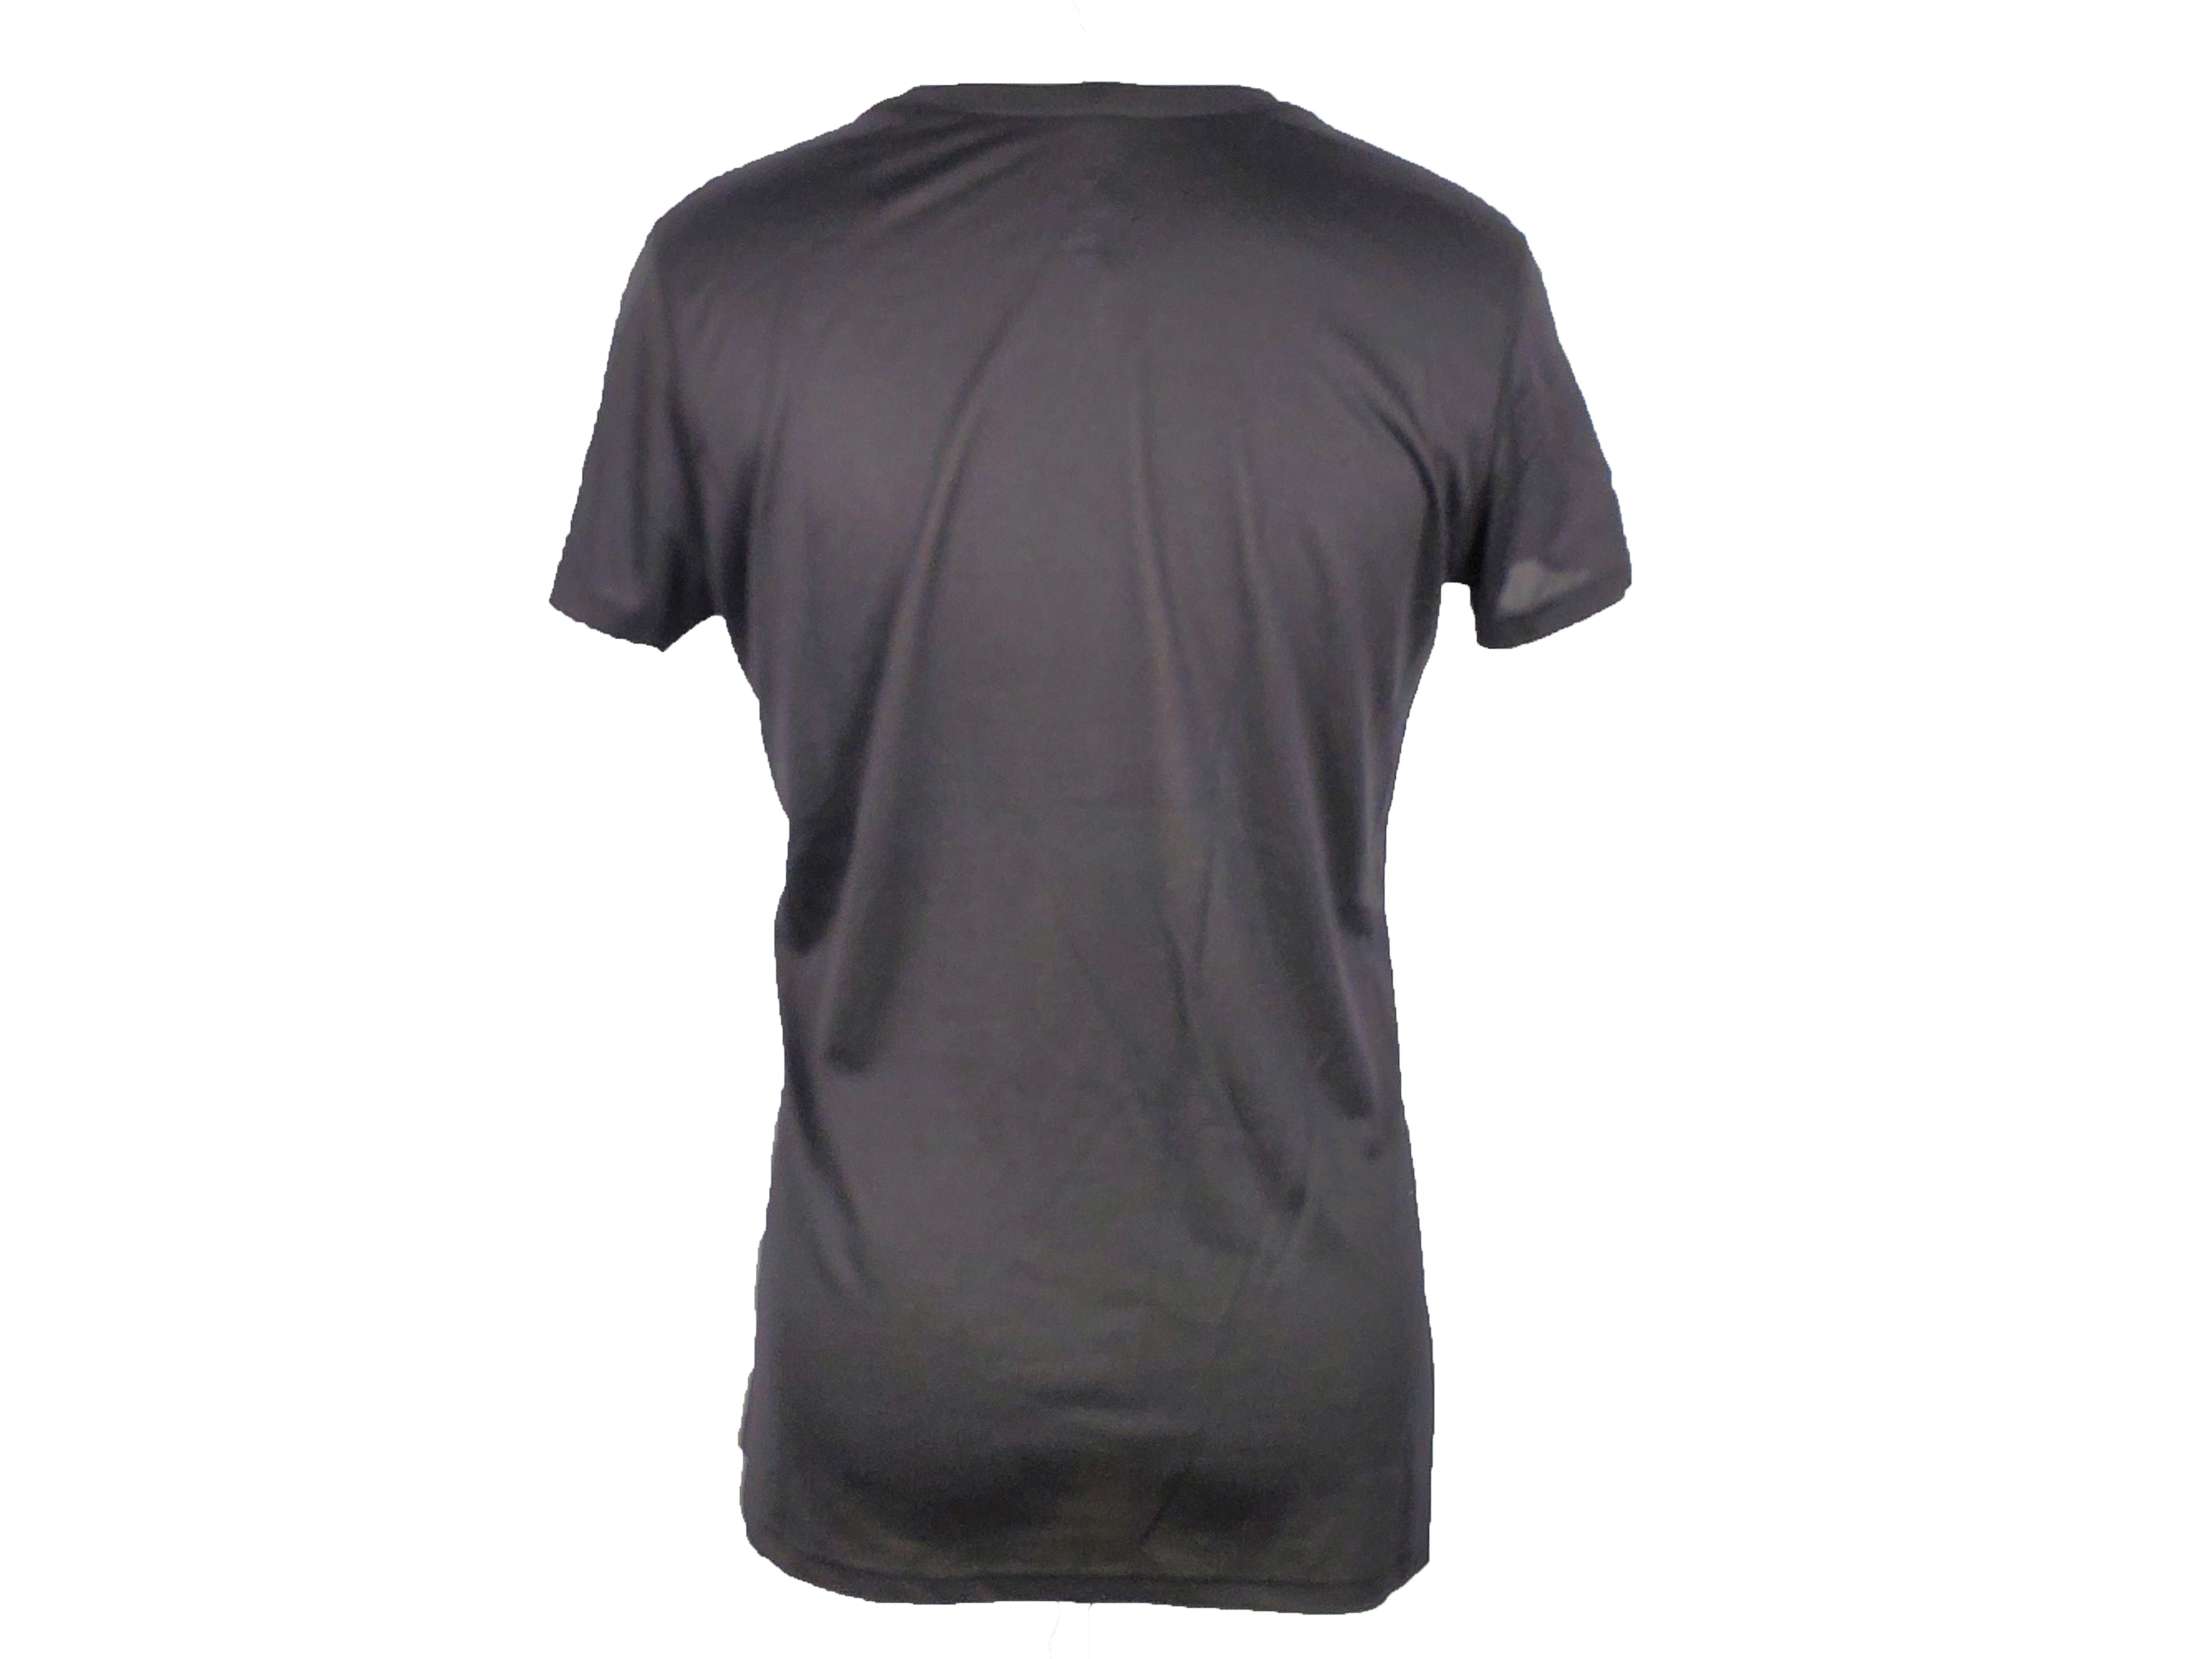 Nike Men's Shirt - Black - M